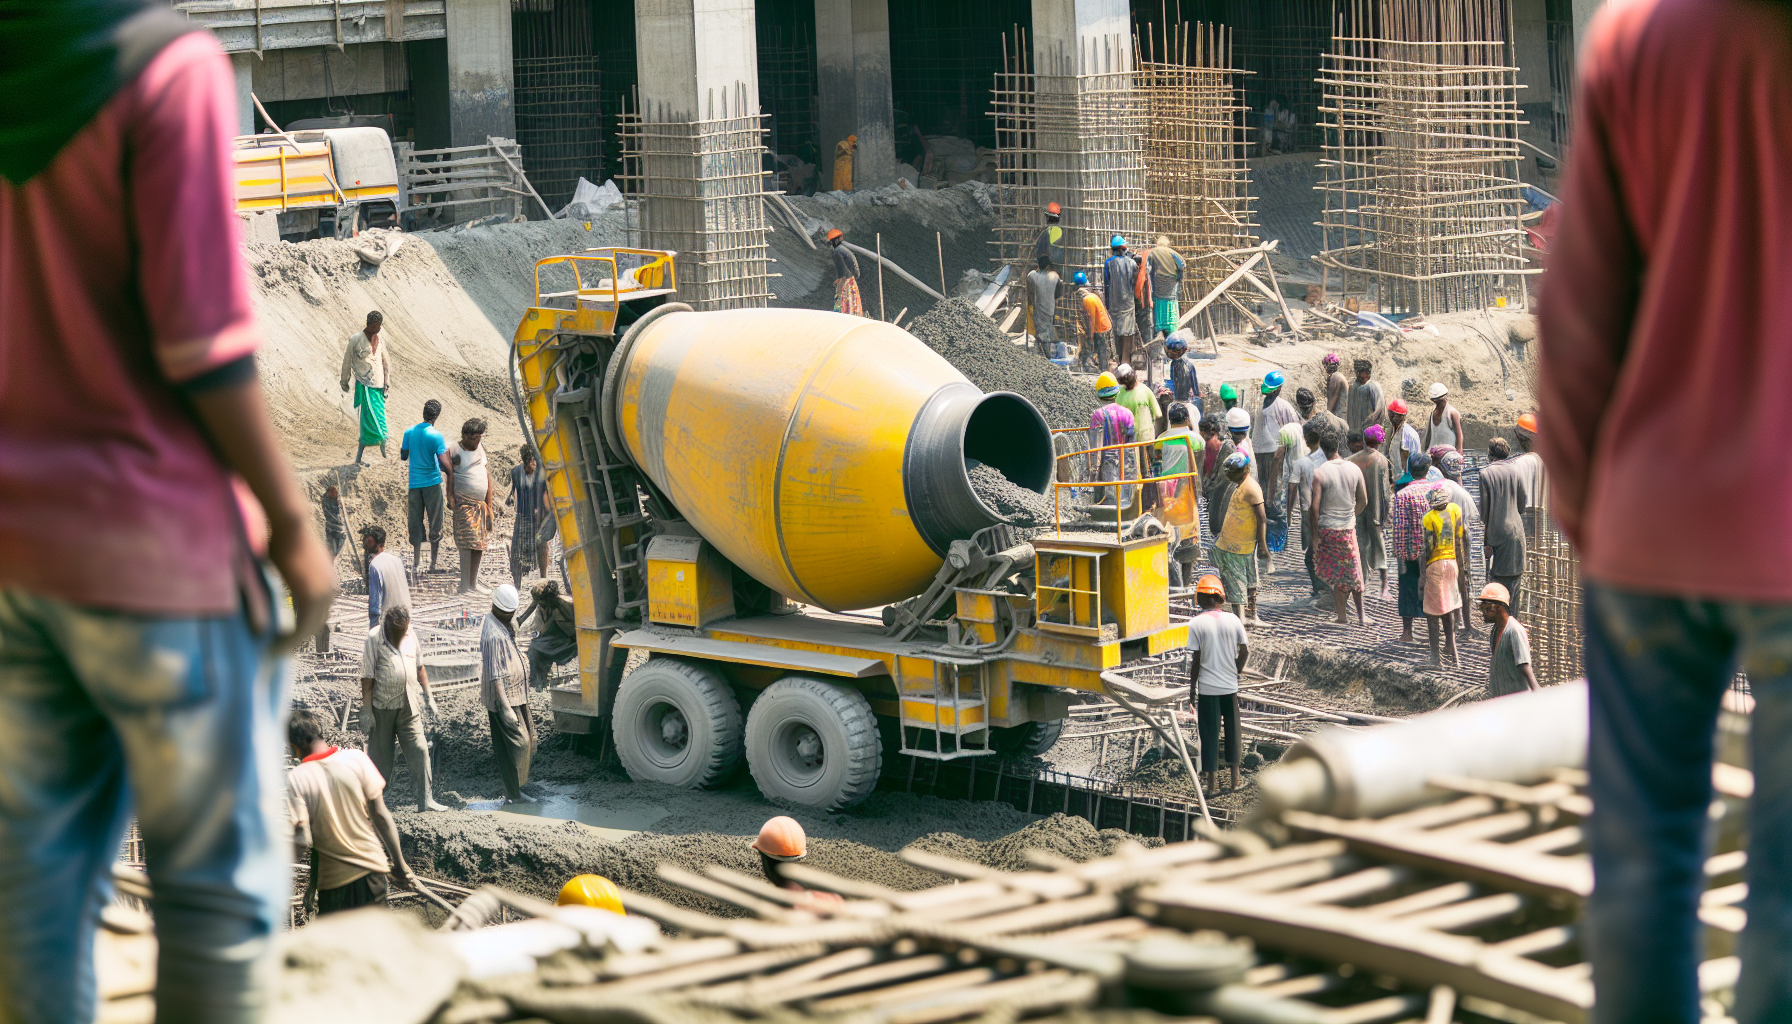 Construction project with large concrete mixer